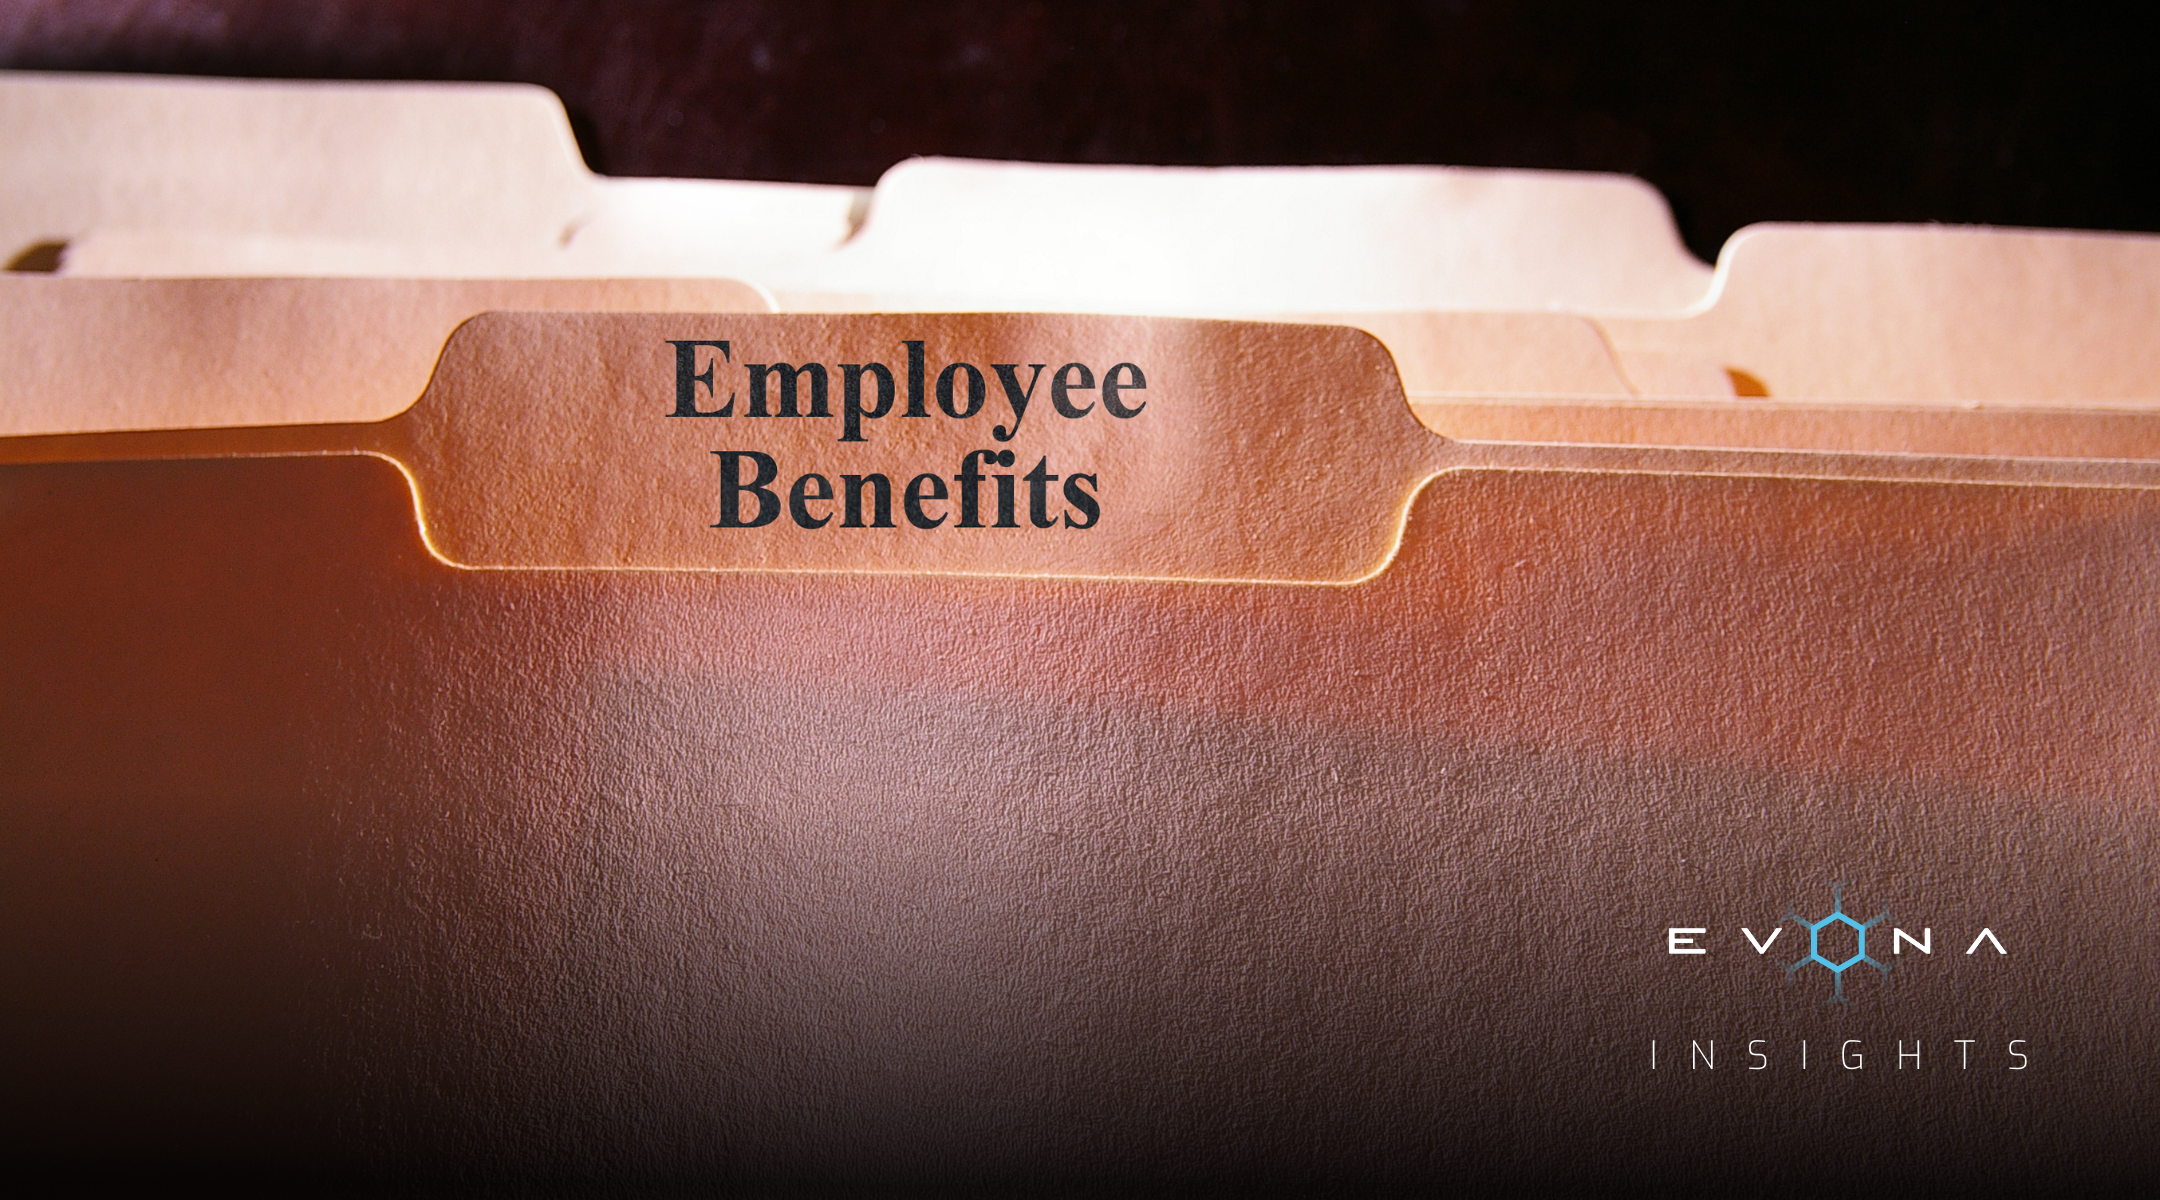 Employee Benefits or the Bare Minimum?